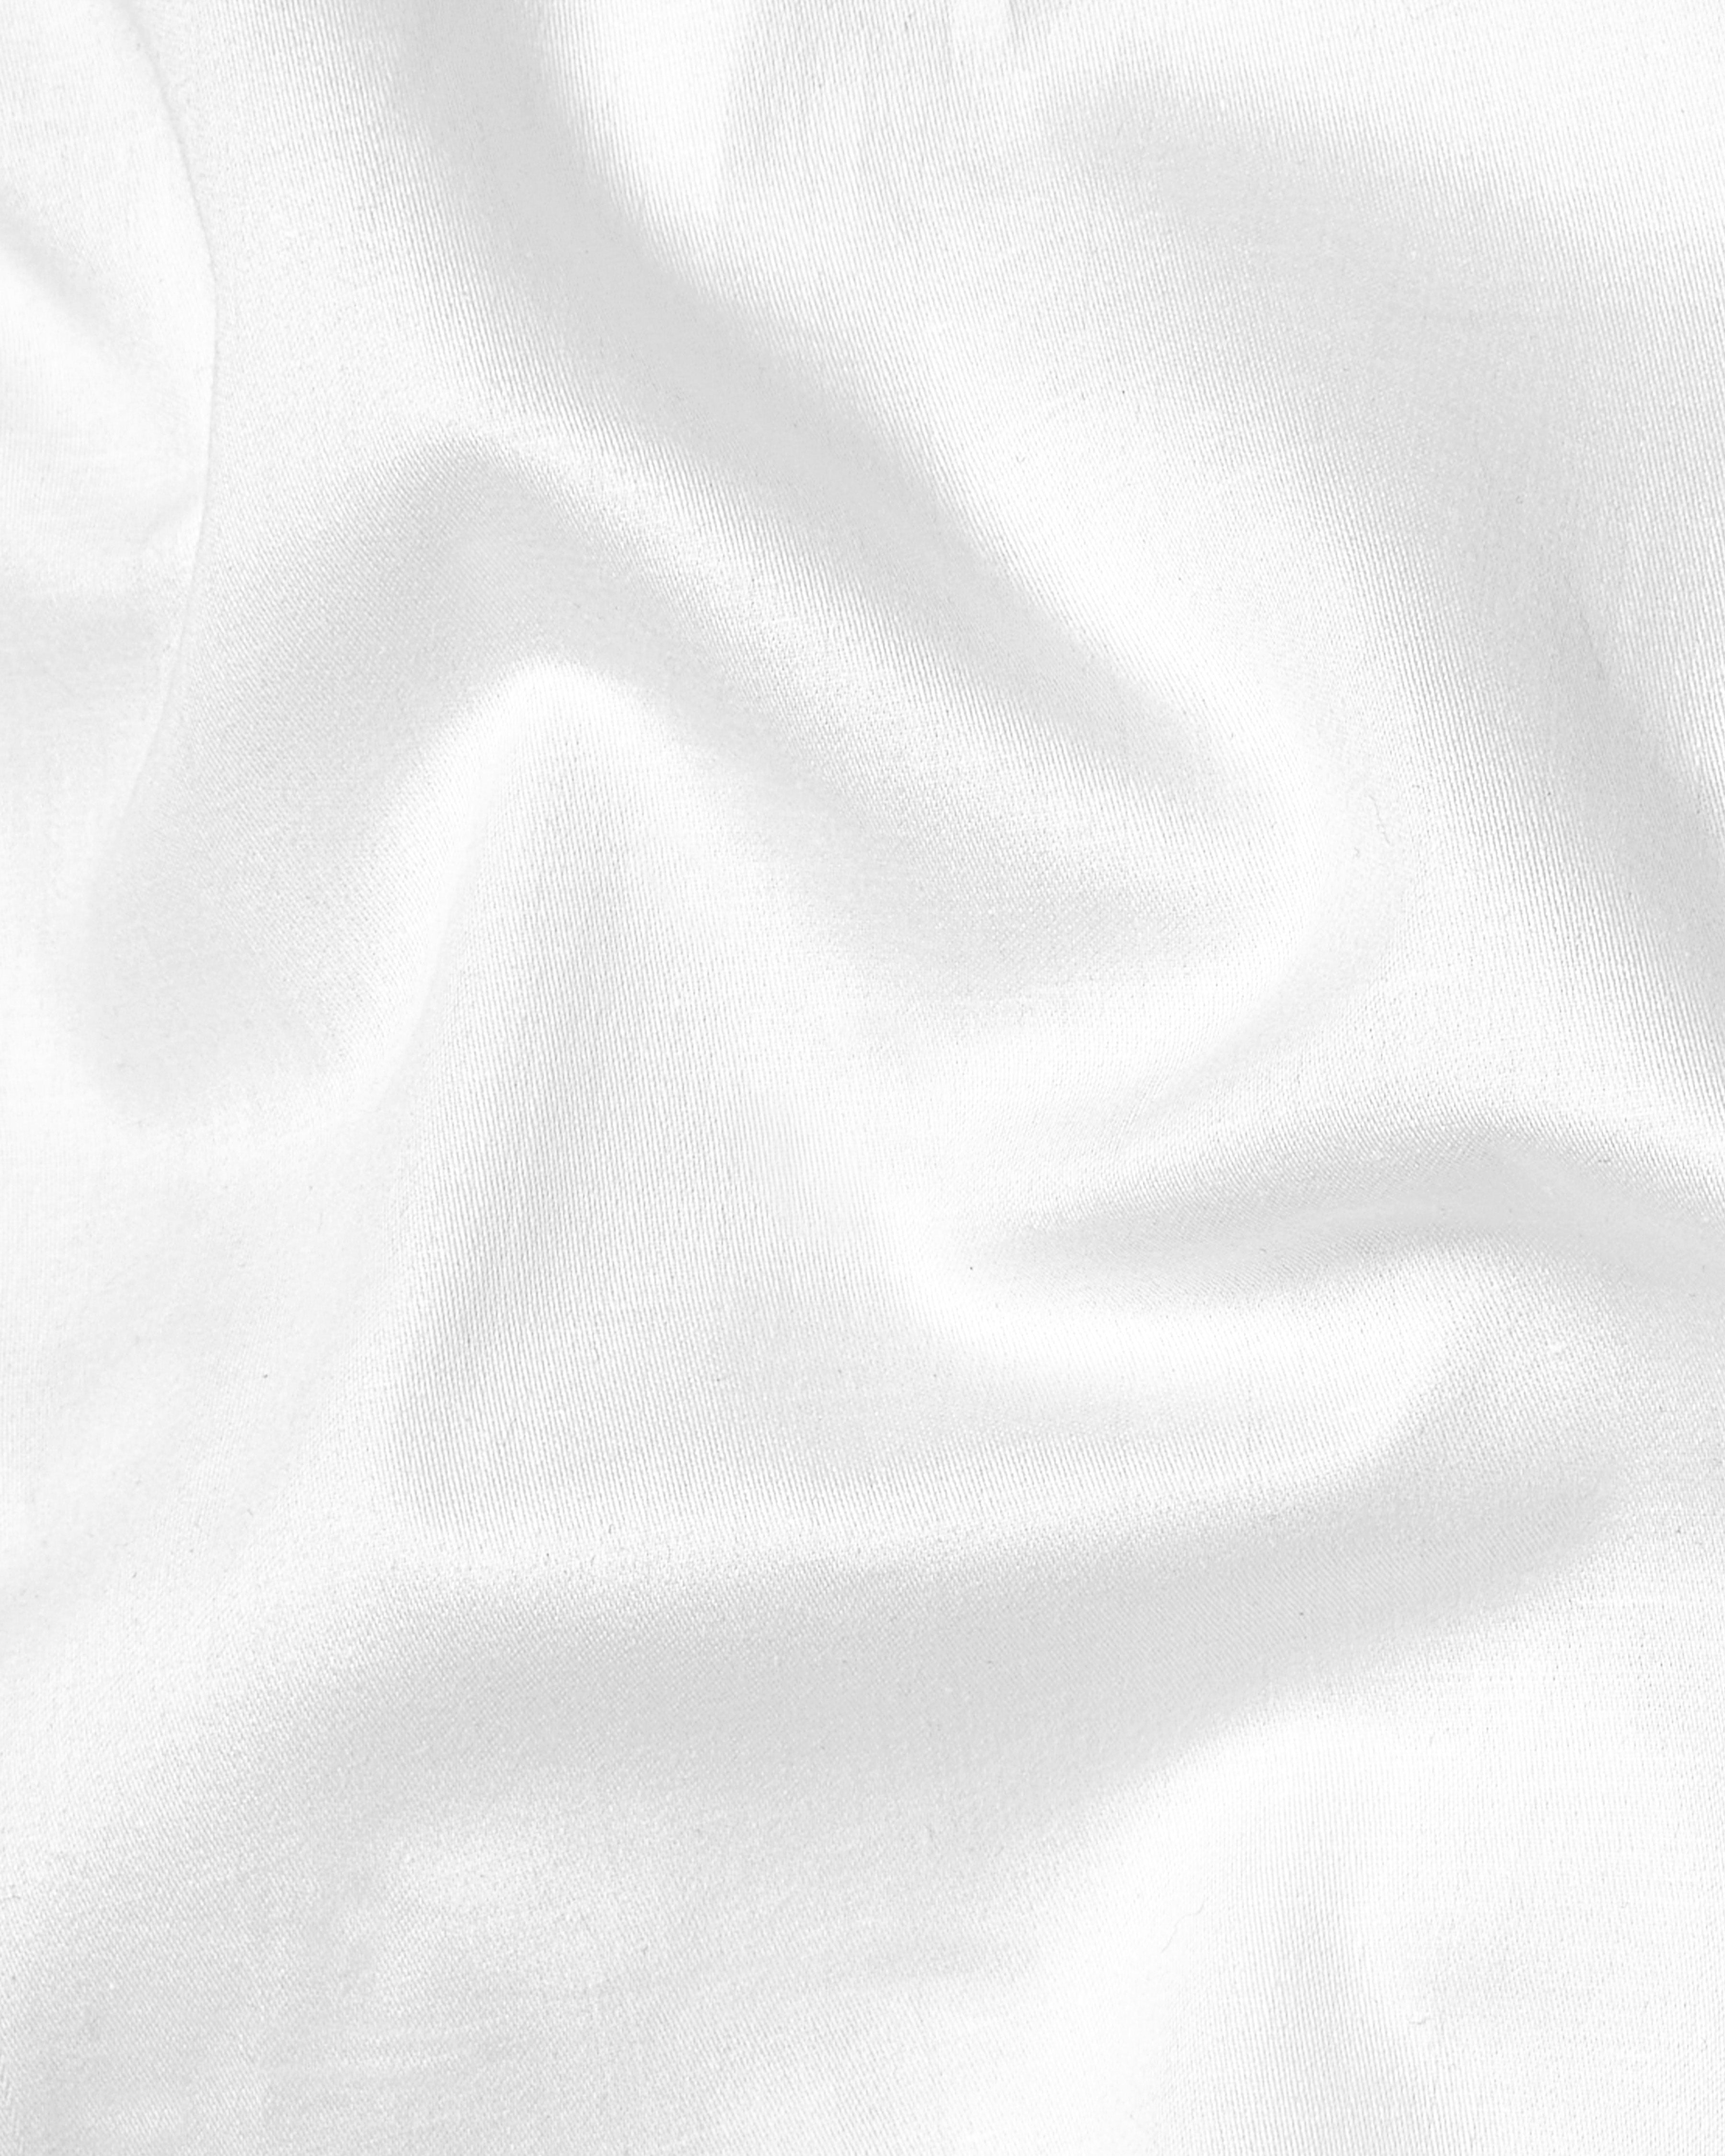 Bright White Subtle Sheen Designer Super Soft Kurta Style Giza Cotton Shirt 4173-KS-BLK-P27-38, 4173-KS-BLK-P27-H-38, 4173-KS-BLK-P27-39, 4173-KS-BLK-P27-H-39, 4173-KS-BLK-P27-40, 4173-KS-BLK-P27-H-40, 4173-KS-BLK-P27-42, 4173-KS-BLK-P27-H-42, 4173-KS-BLK-P27-44, 4173-KS-BLK-P27-H-44, 4173-KS-BLK-P27-46, 4173-KS-BLK-P27-H-46, 4173-KS-BLK-P27-48, 4173-KS-BLK-P27-H-48, 4173-KS-BLK-P27-50, 4173-KS-BLK-P27-H-50, 4173-KS-BLK-P27-52, 4173-KS-BLK-P27-H-52